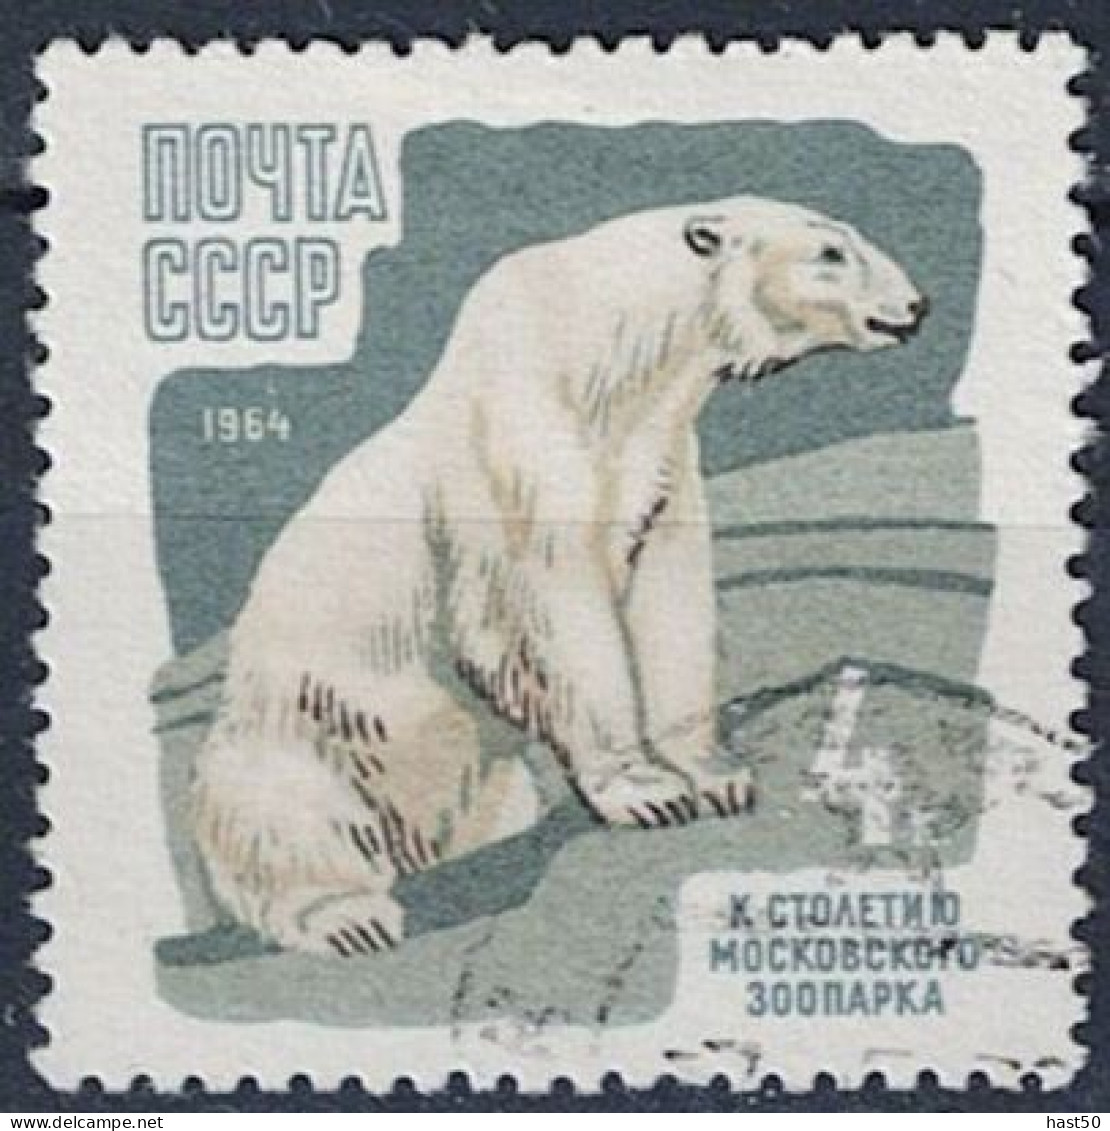 Sowjetunion UdSSR - Eisbär (Ursus Maritimus) (MiNr. 2916) 1964 - Gest Used Obl - Gebraucht